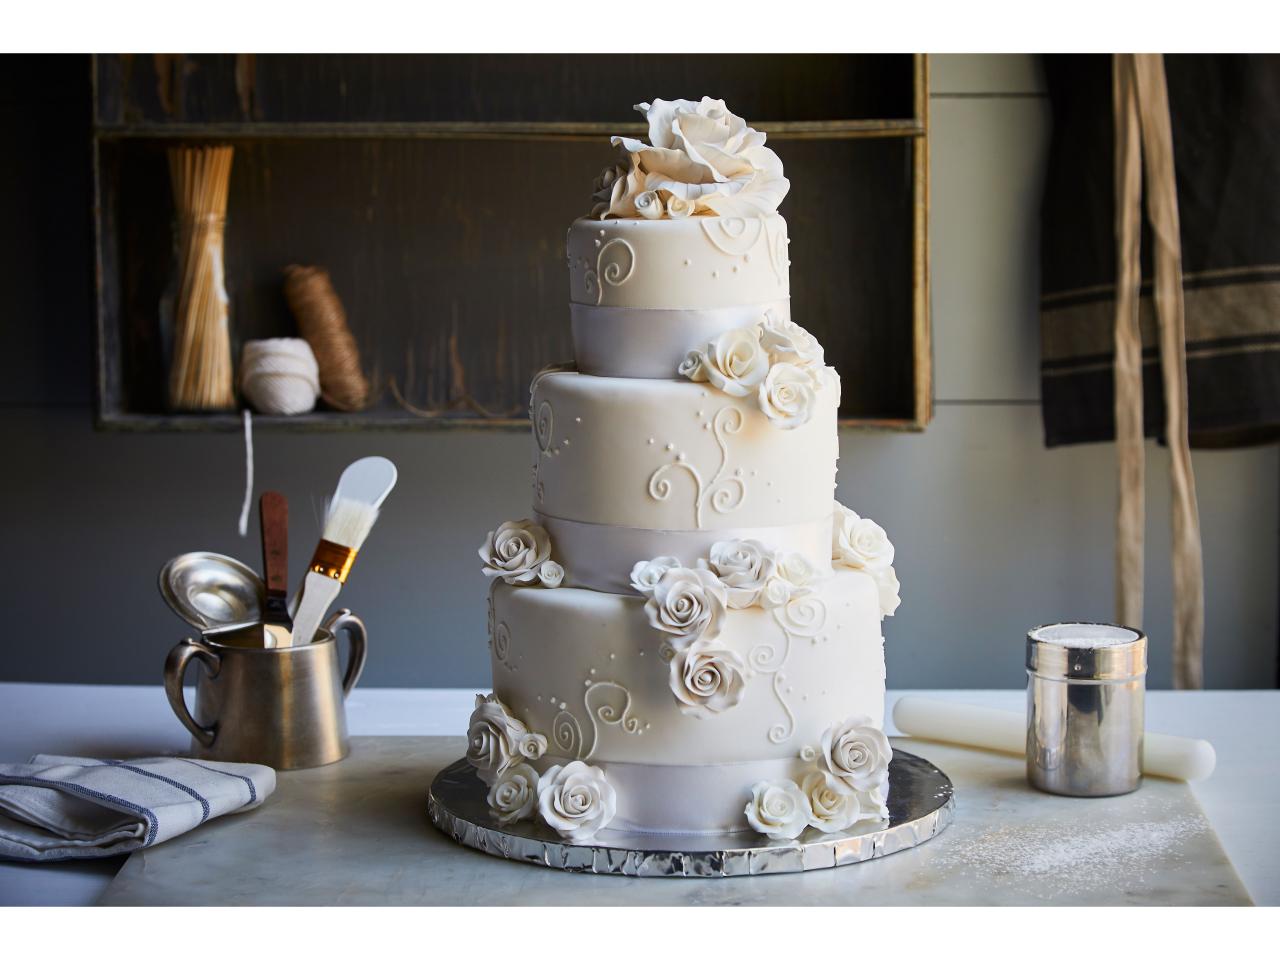 Duff Goldman's Wedding Cake Kit Is the Ultimate Wedding